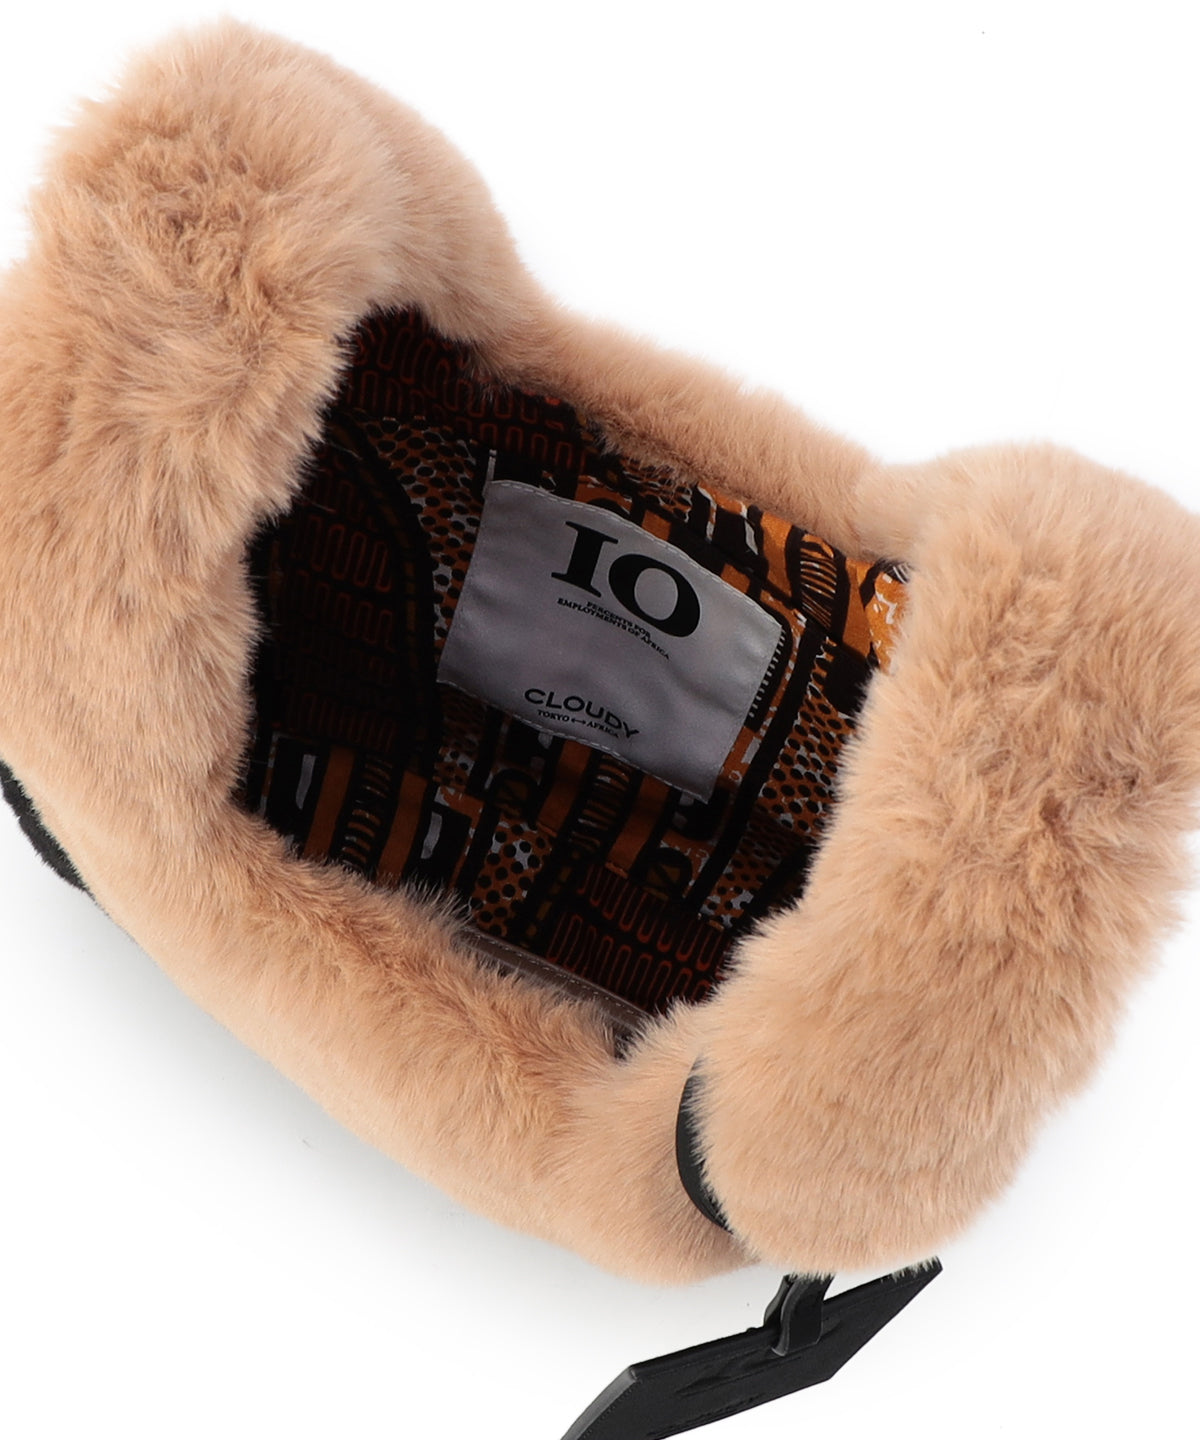 Eco Fur Convenience Bag (Small) BEIGE×BLACK | Bag | CLOUDY 